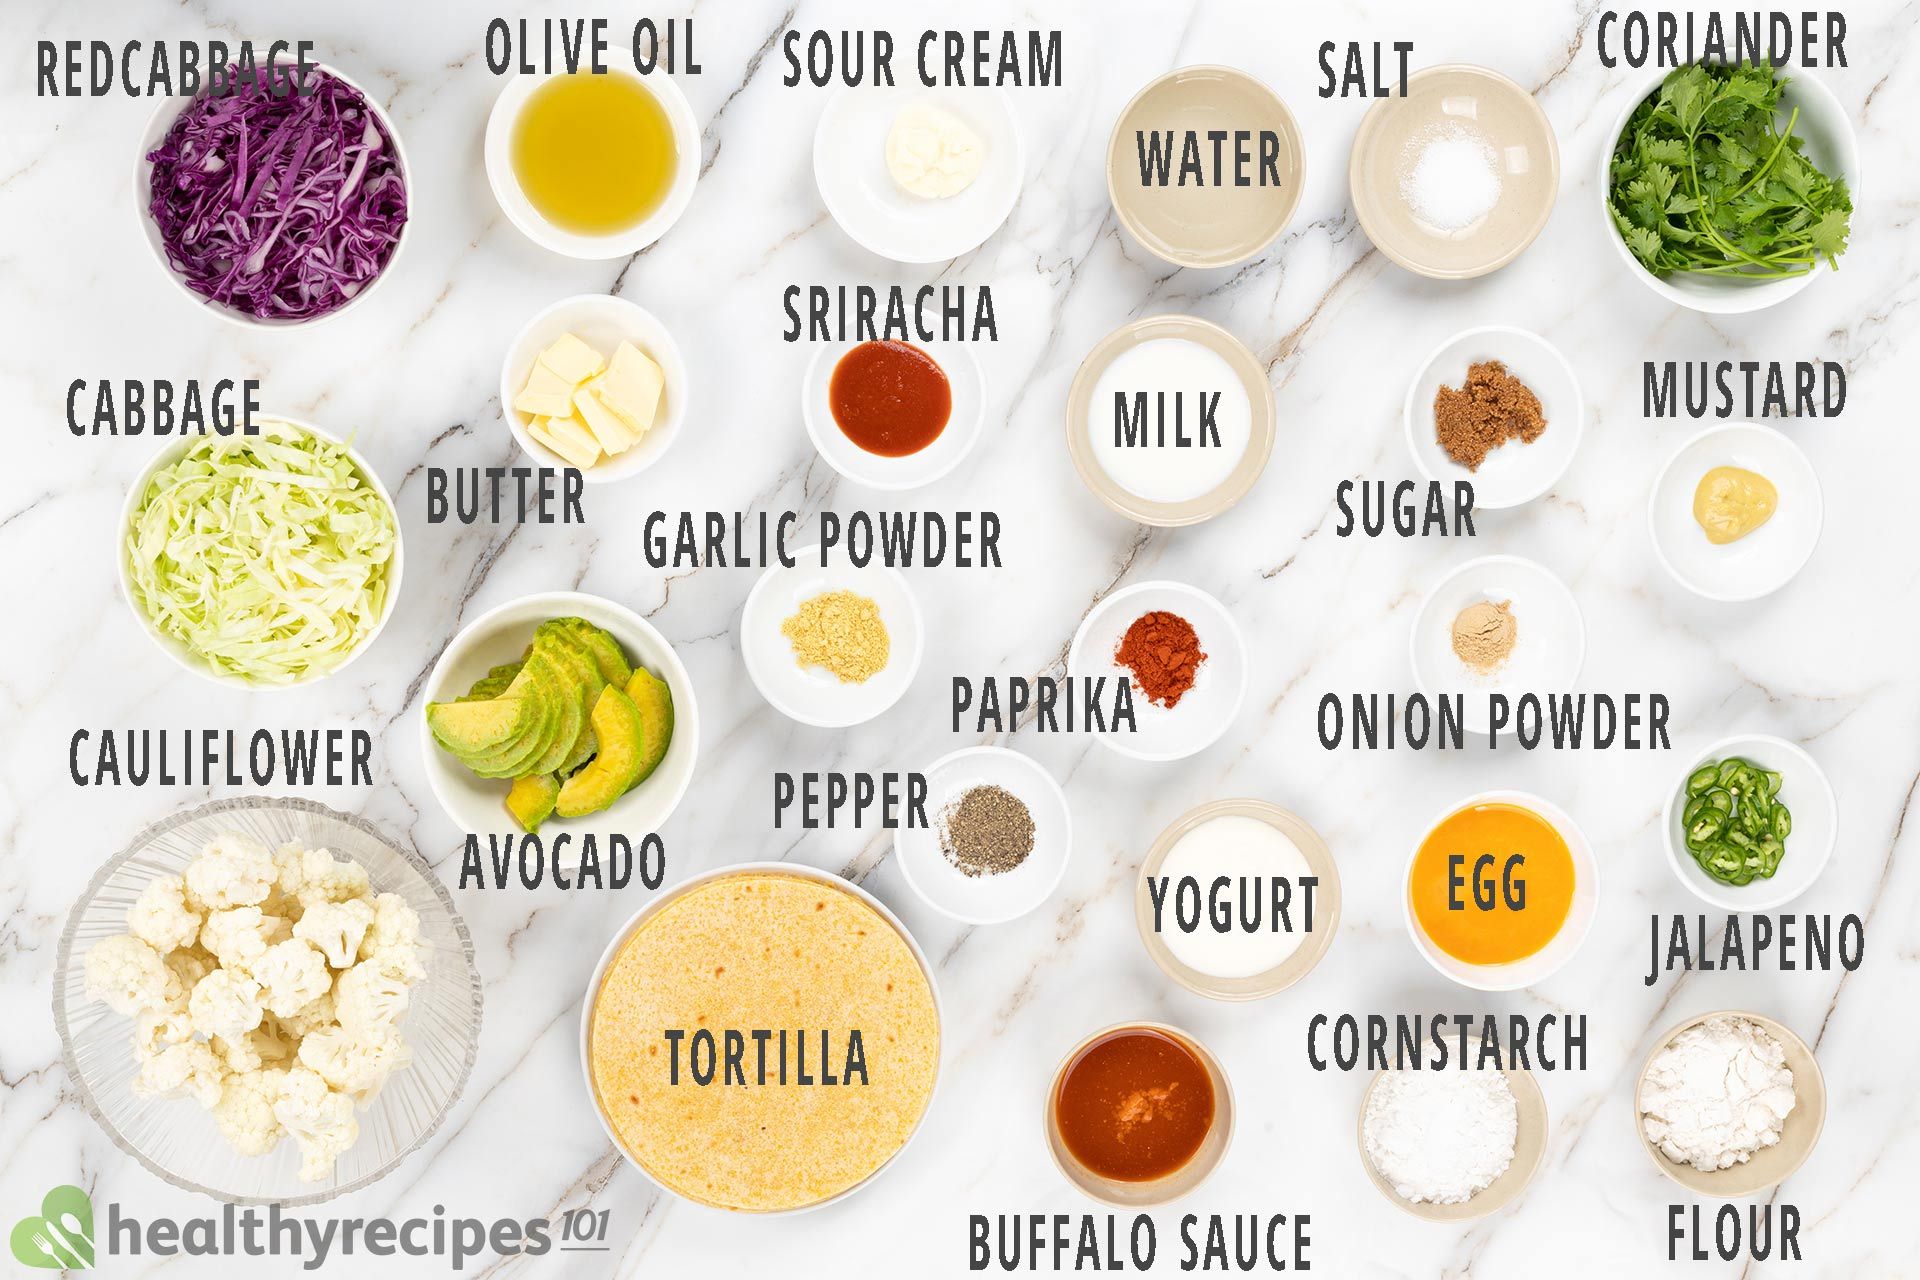 Buffalo Cauliflower Tacos Ingredients